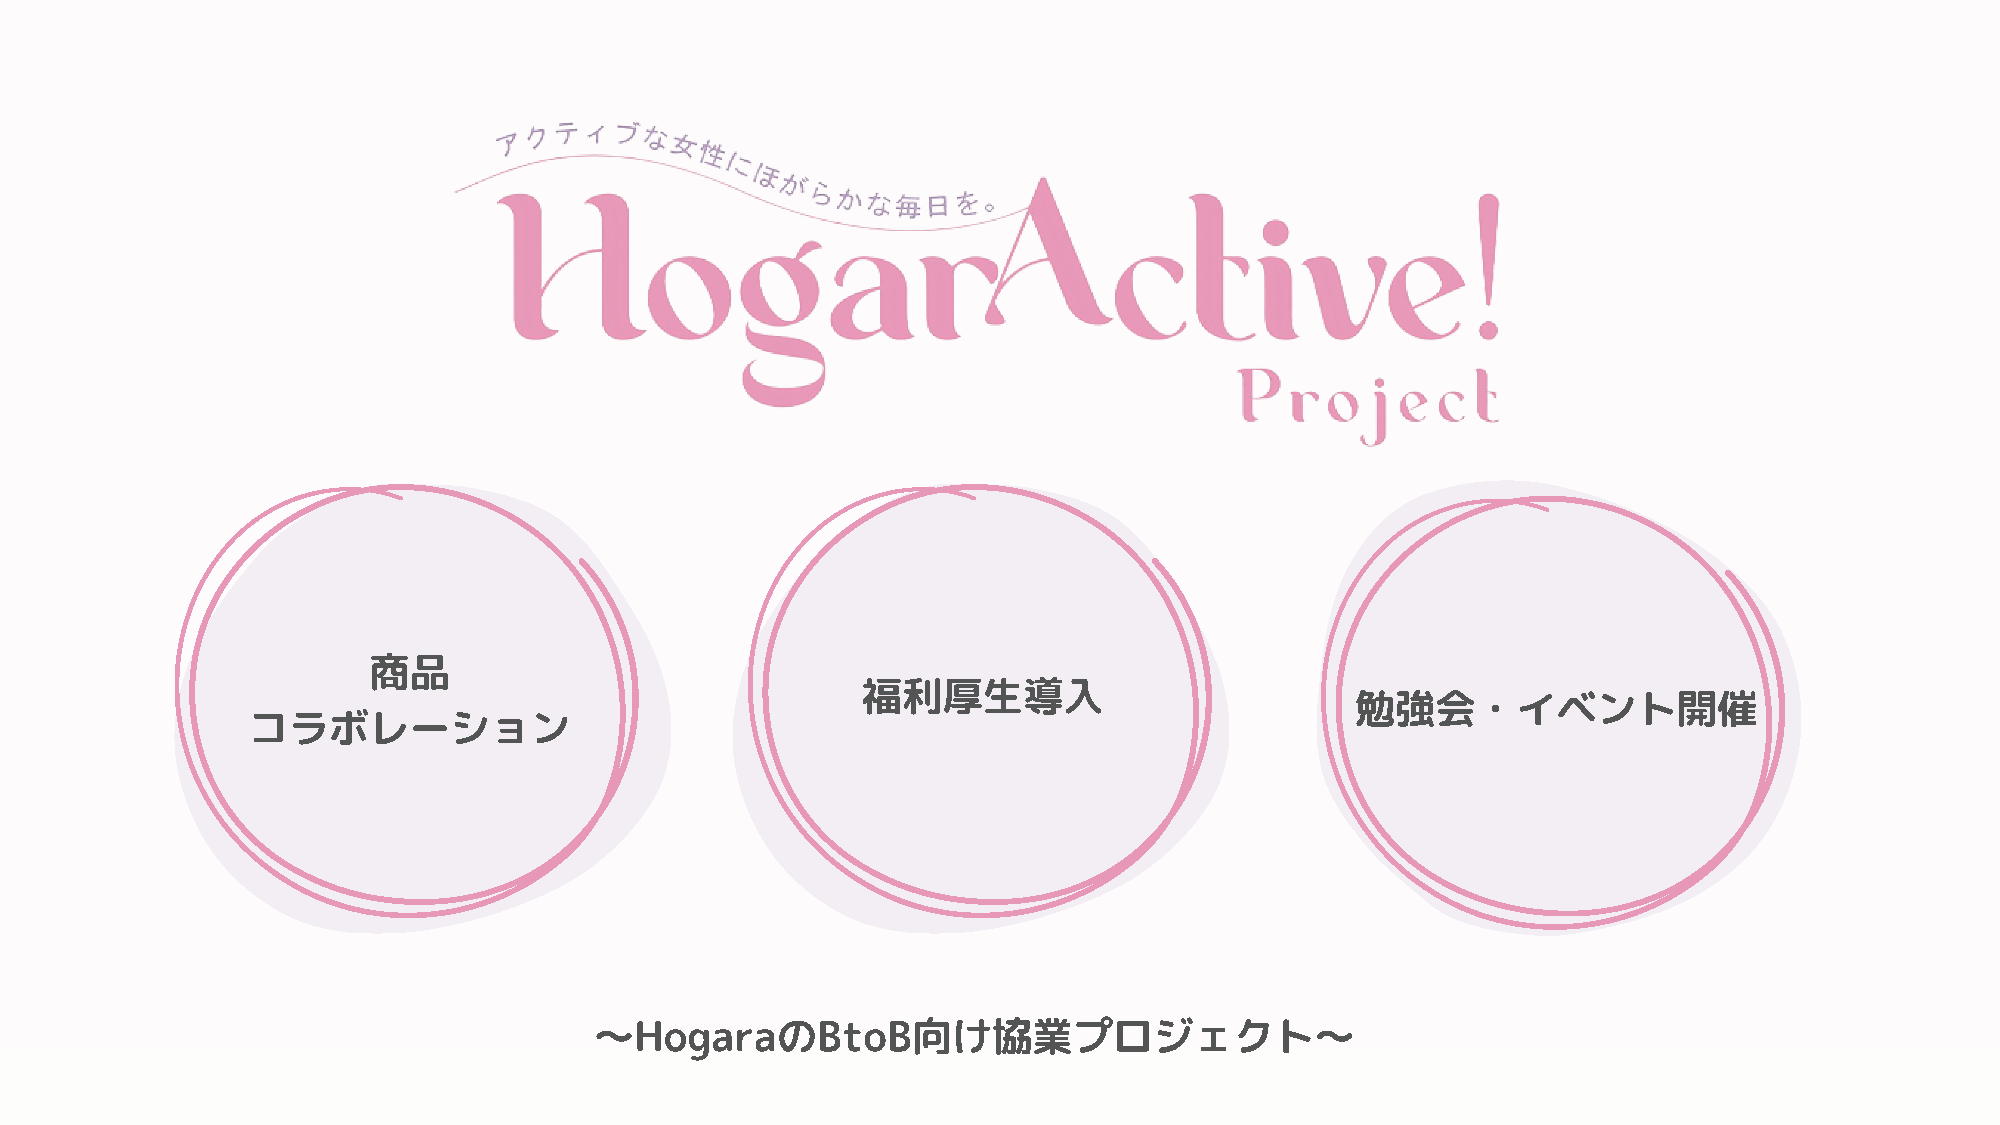 HogarActive Project